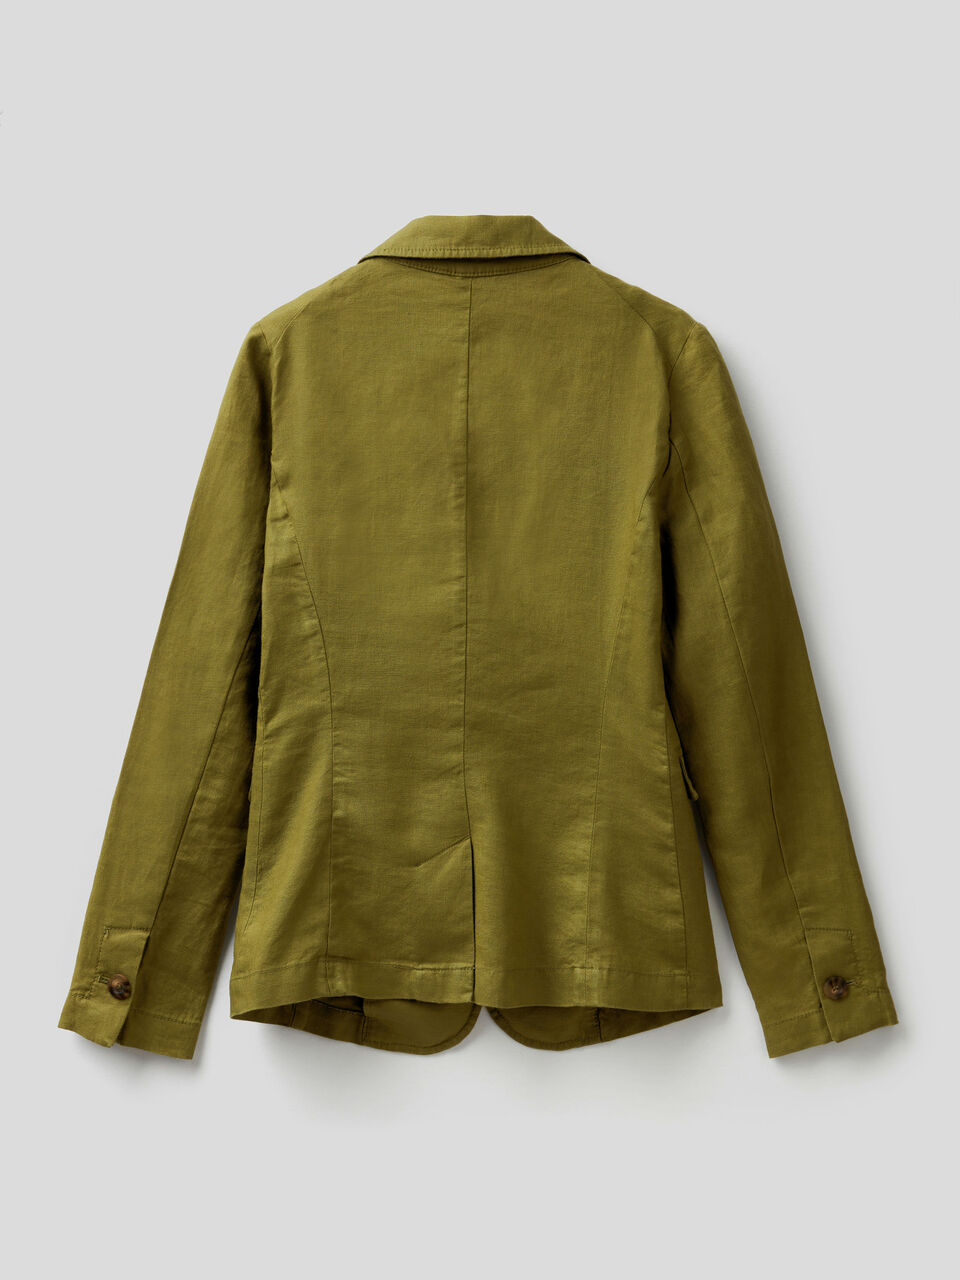 Talbots Blazer Pure Irish Linen Kelly Green Open Blazer Jacket